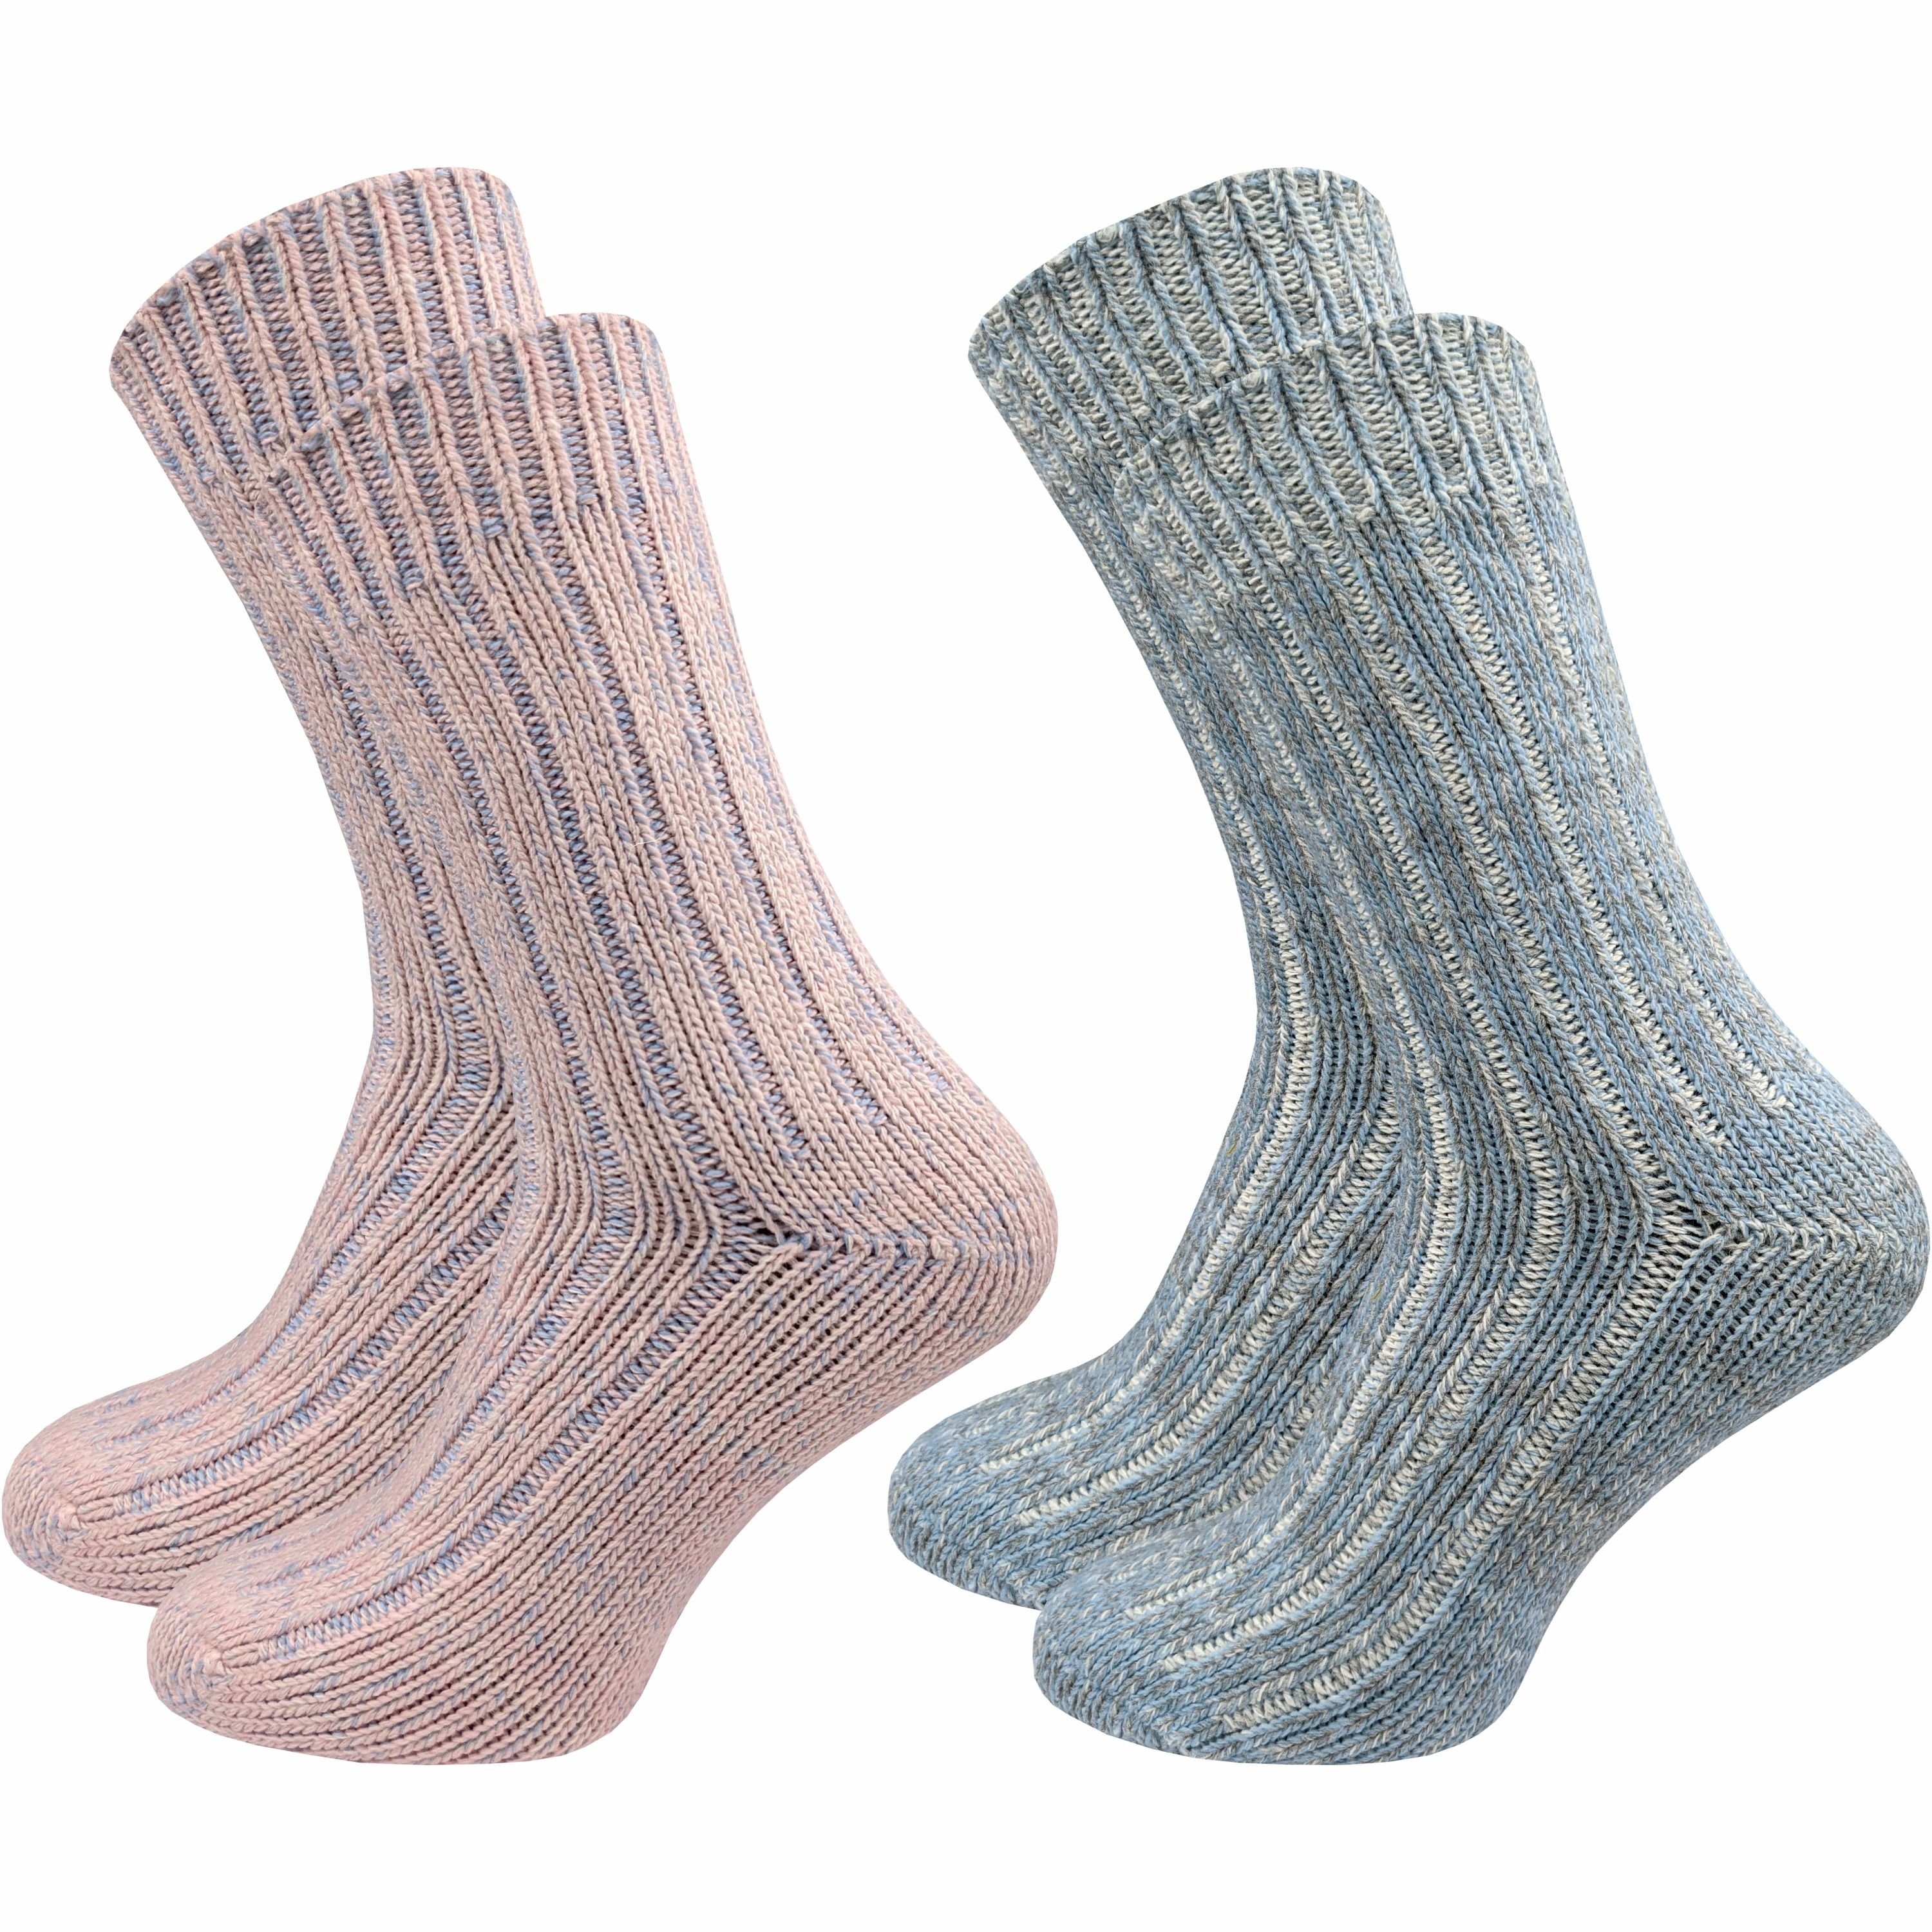 GAWILO Norwegersocken für Damen - Extra warm & weich dank Wolle - Dicke Wintersocken (2 Paar) Wollsocken für warme Füße - auch als Thermosocke geeignet rosa & grau | Wintersocken